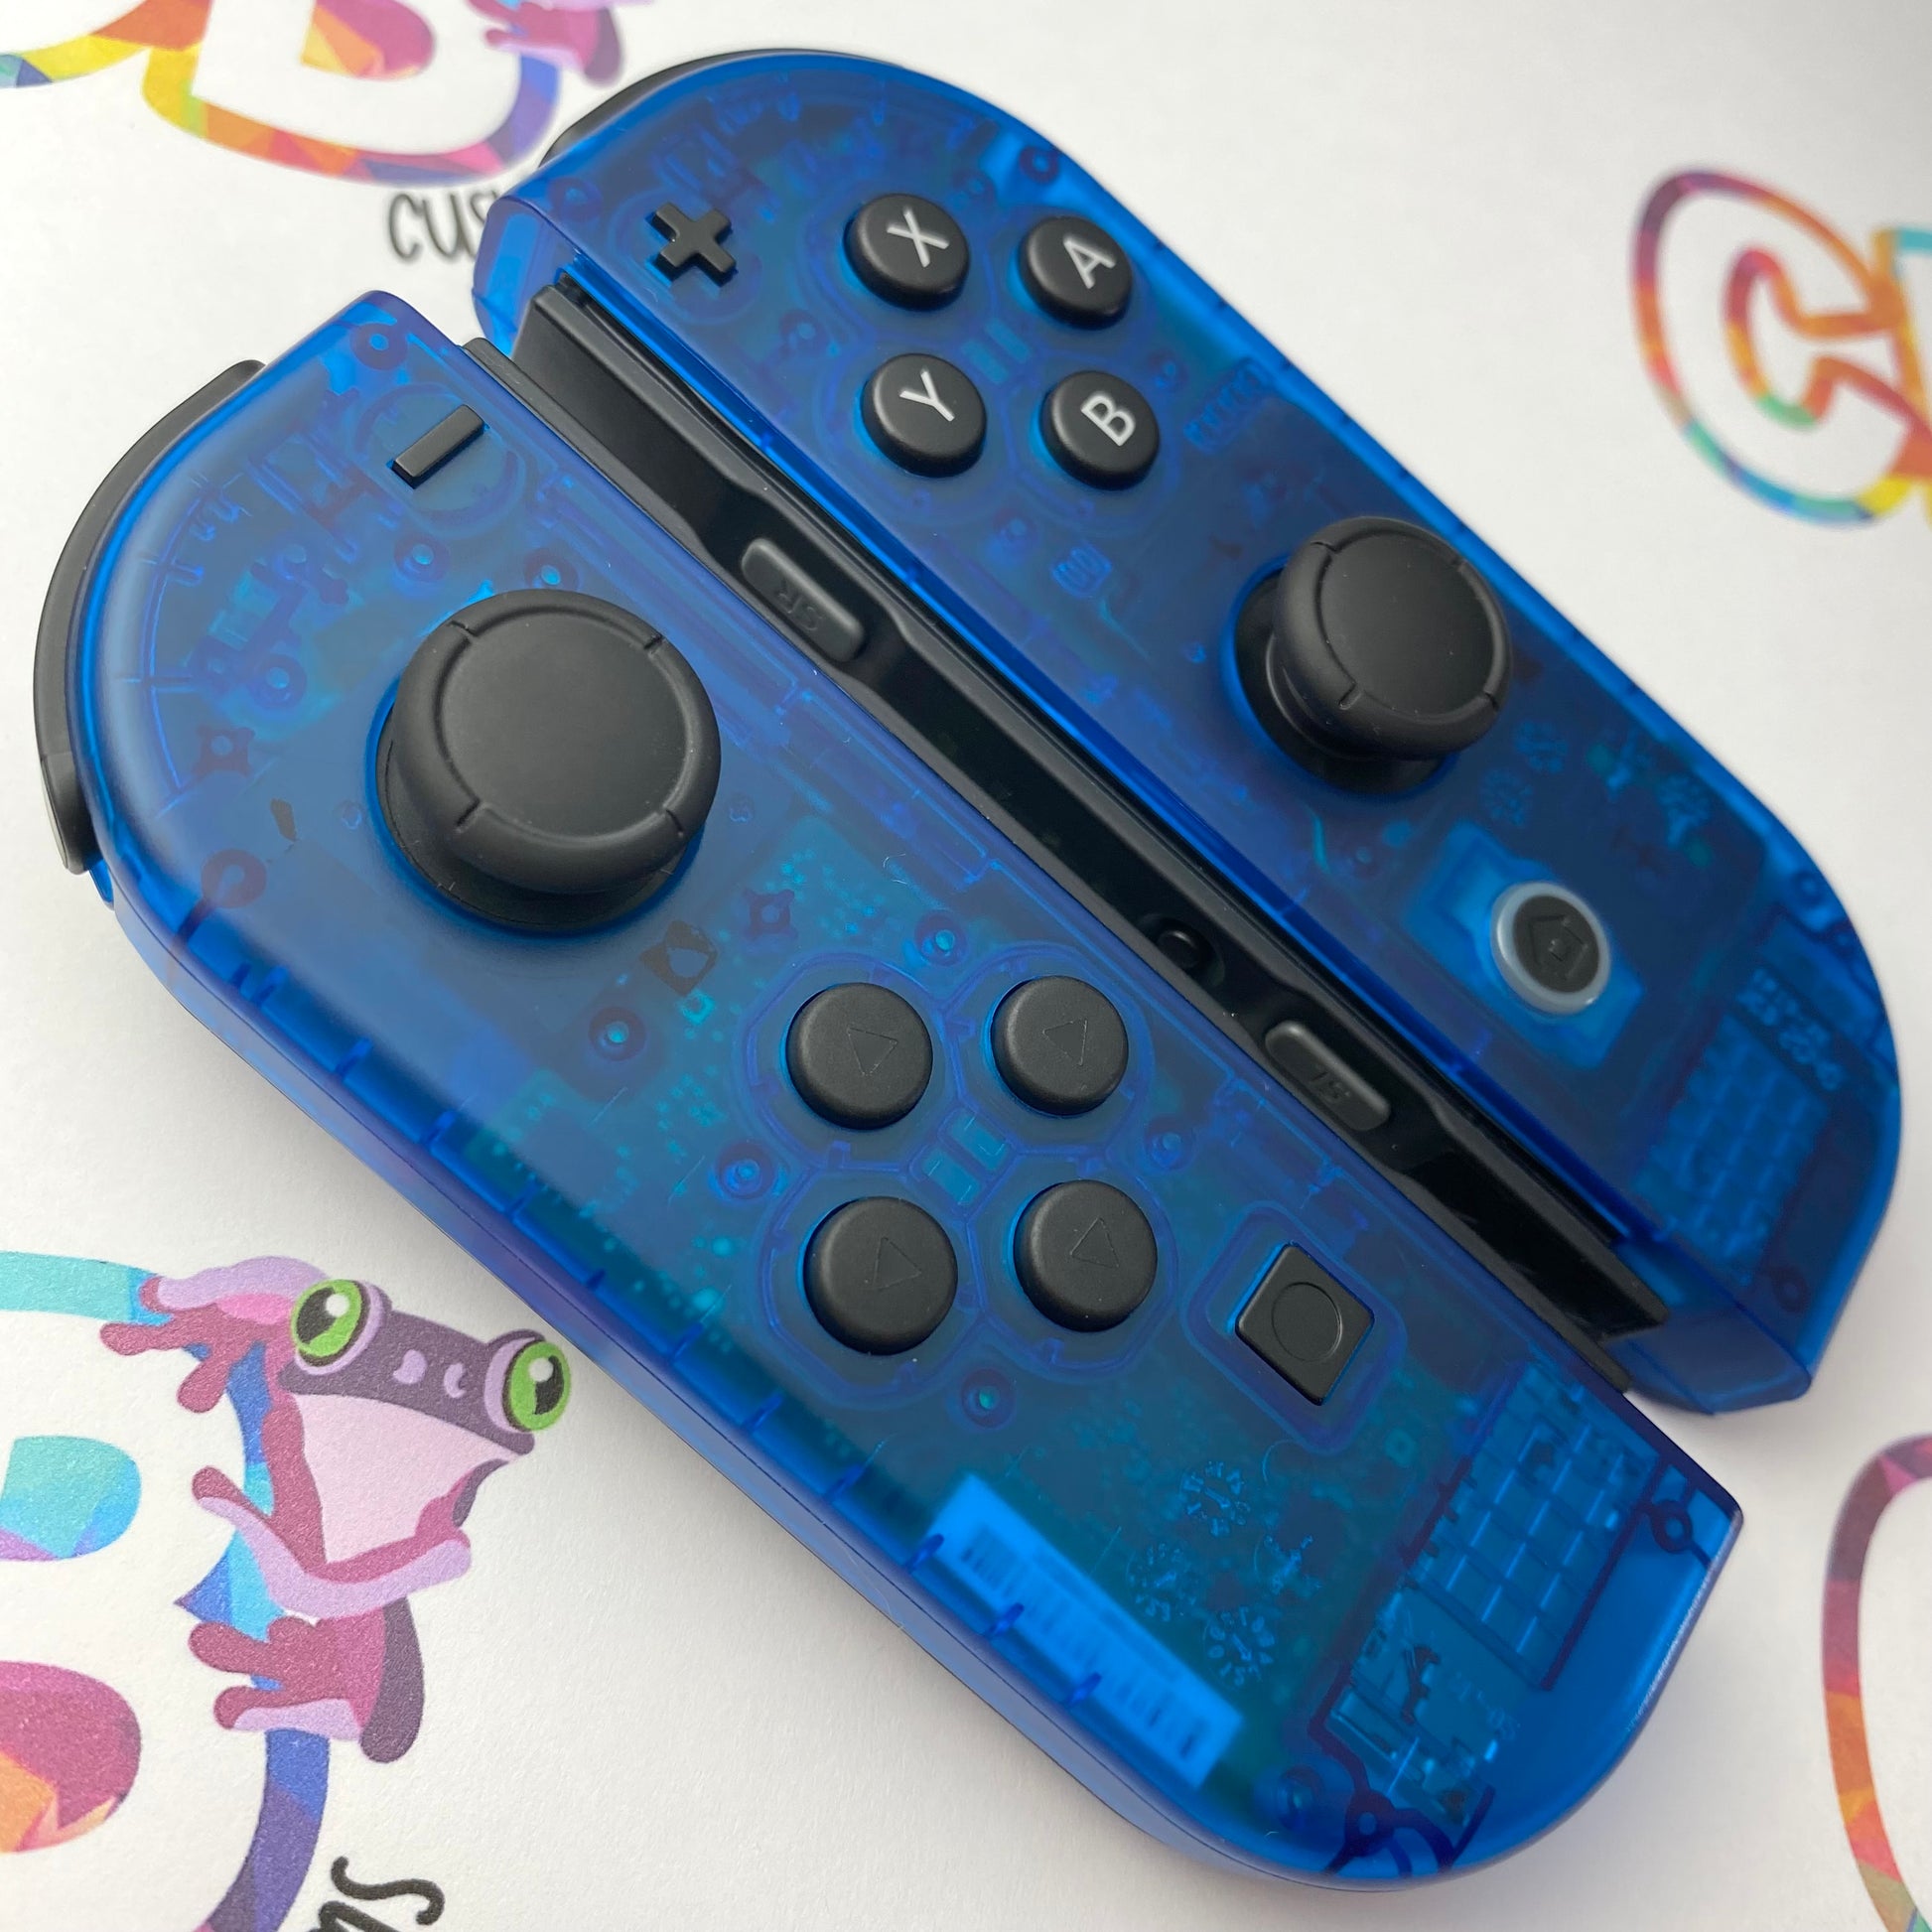 Nintendo switch v1 - Nicaragua